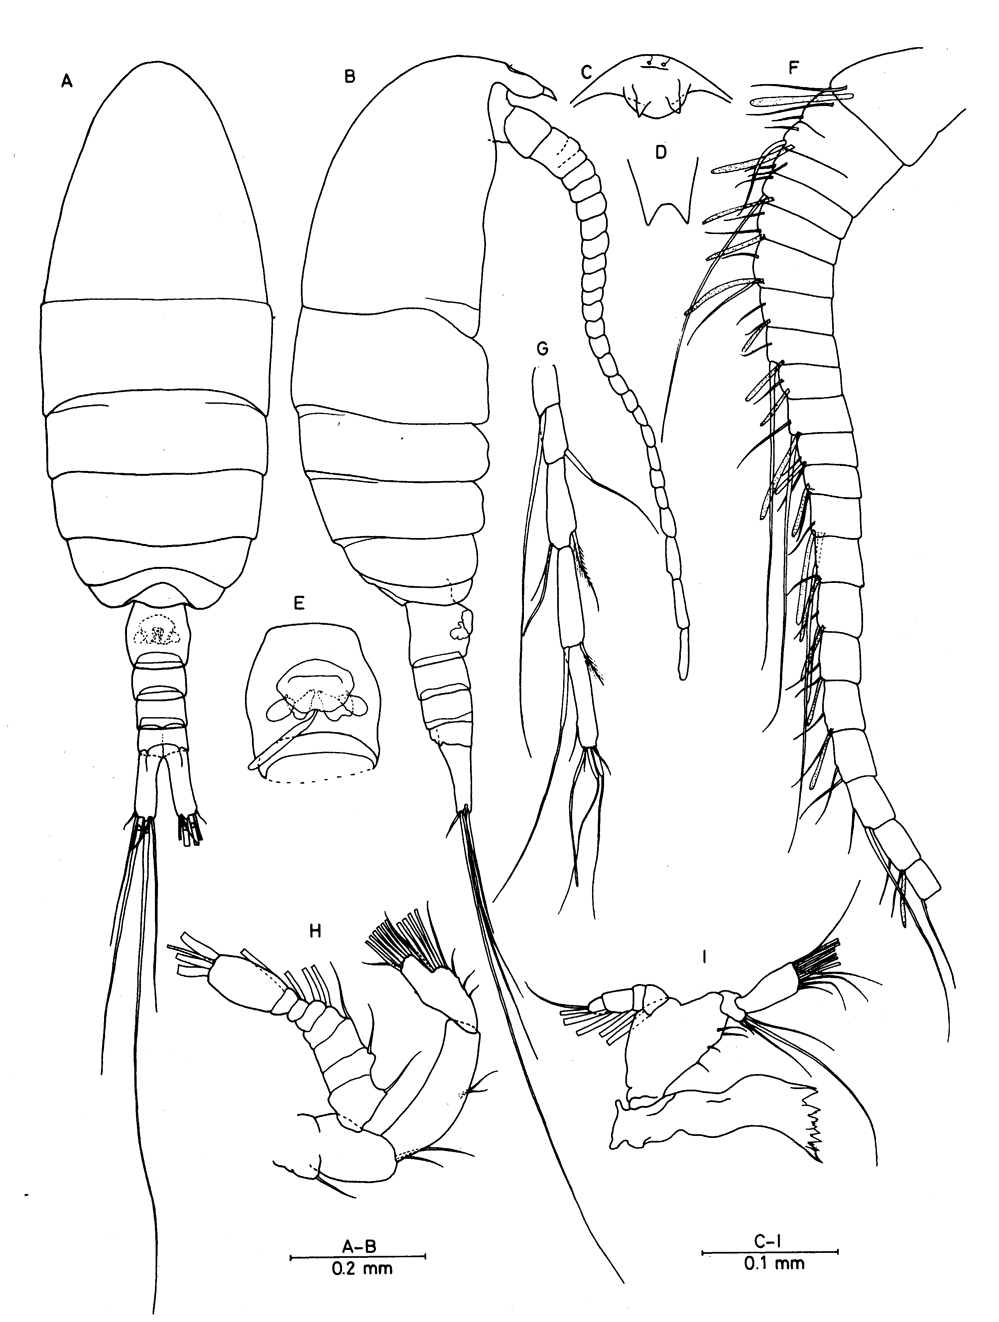 Species Brattstromia longicaudata - Plate 1 of morphological figures